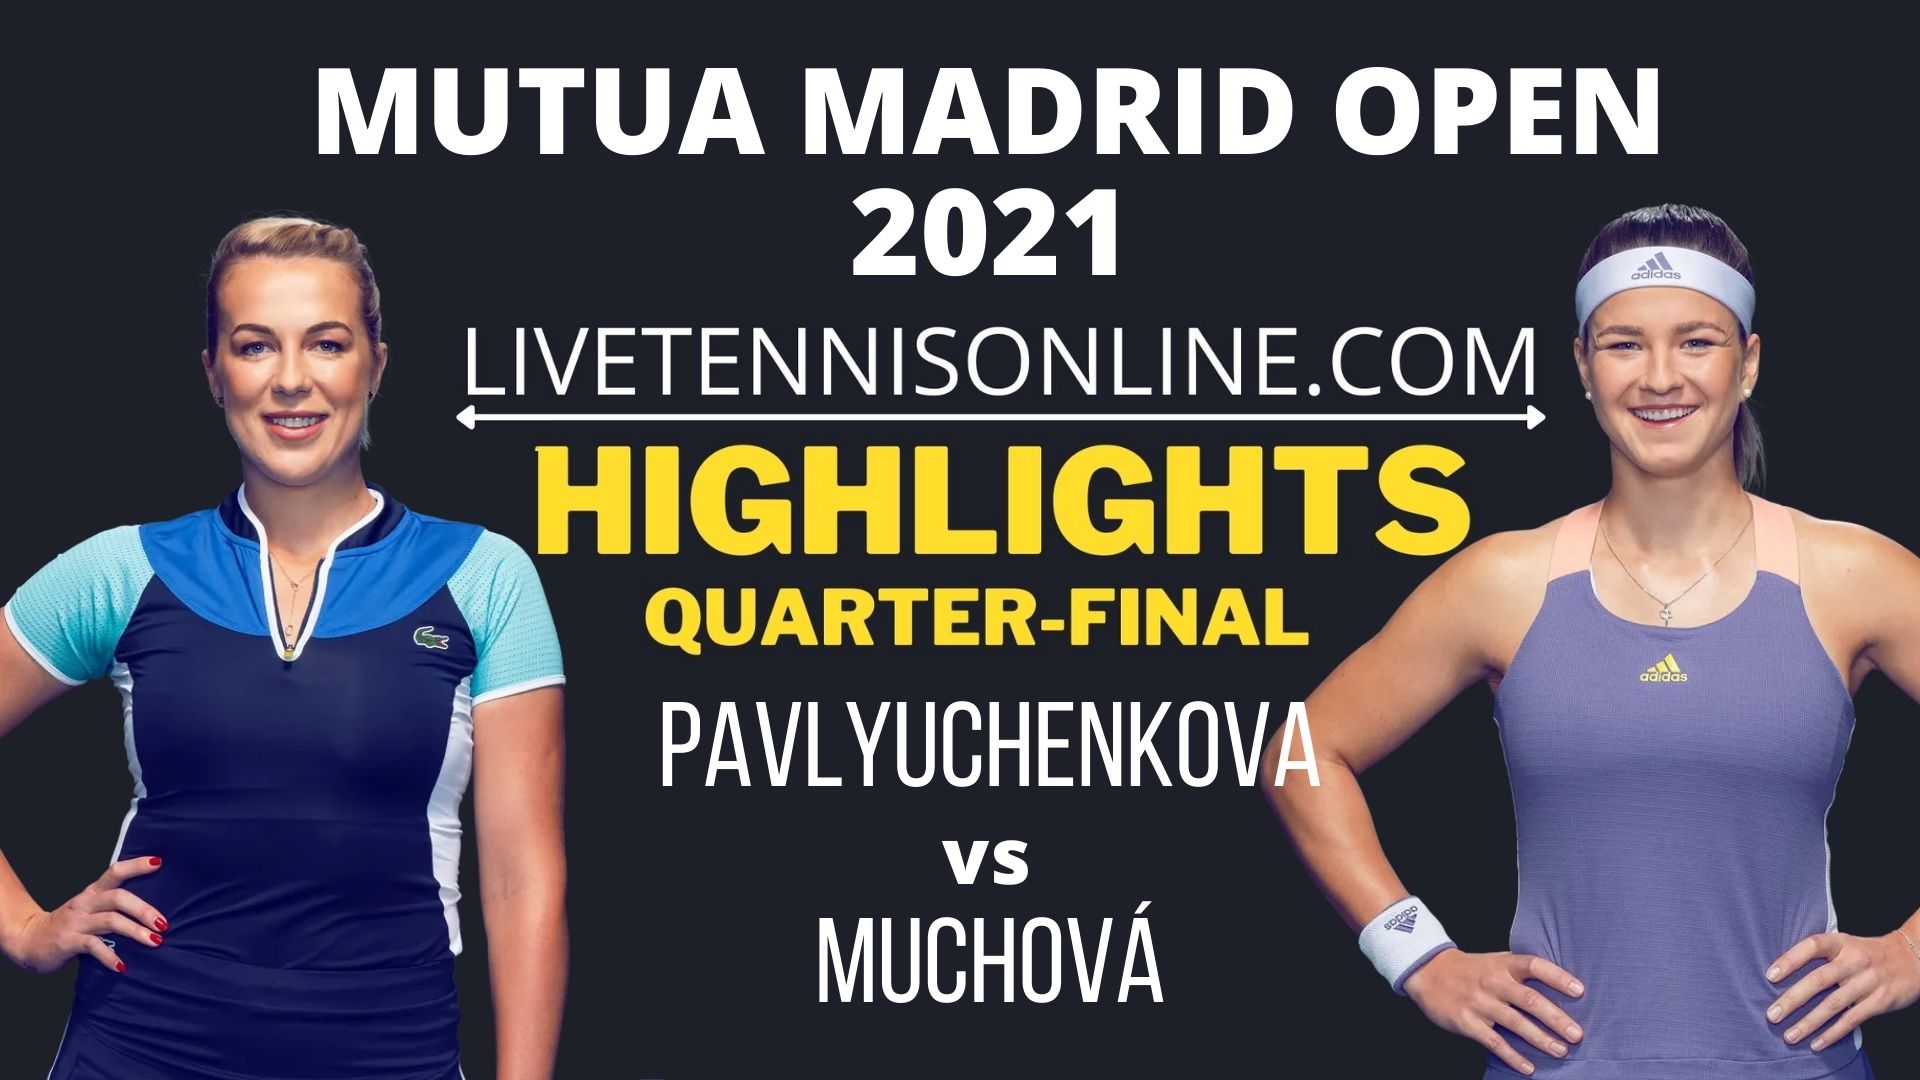 Pavlyuchenkova Vs Muchova Quarter Final Highlights 2021 Madrid